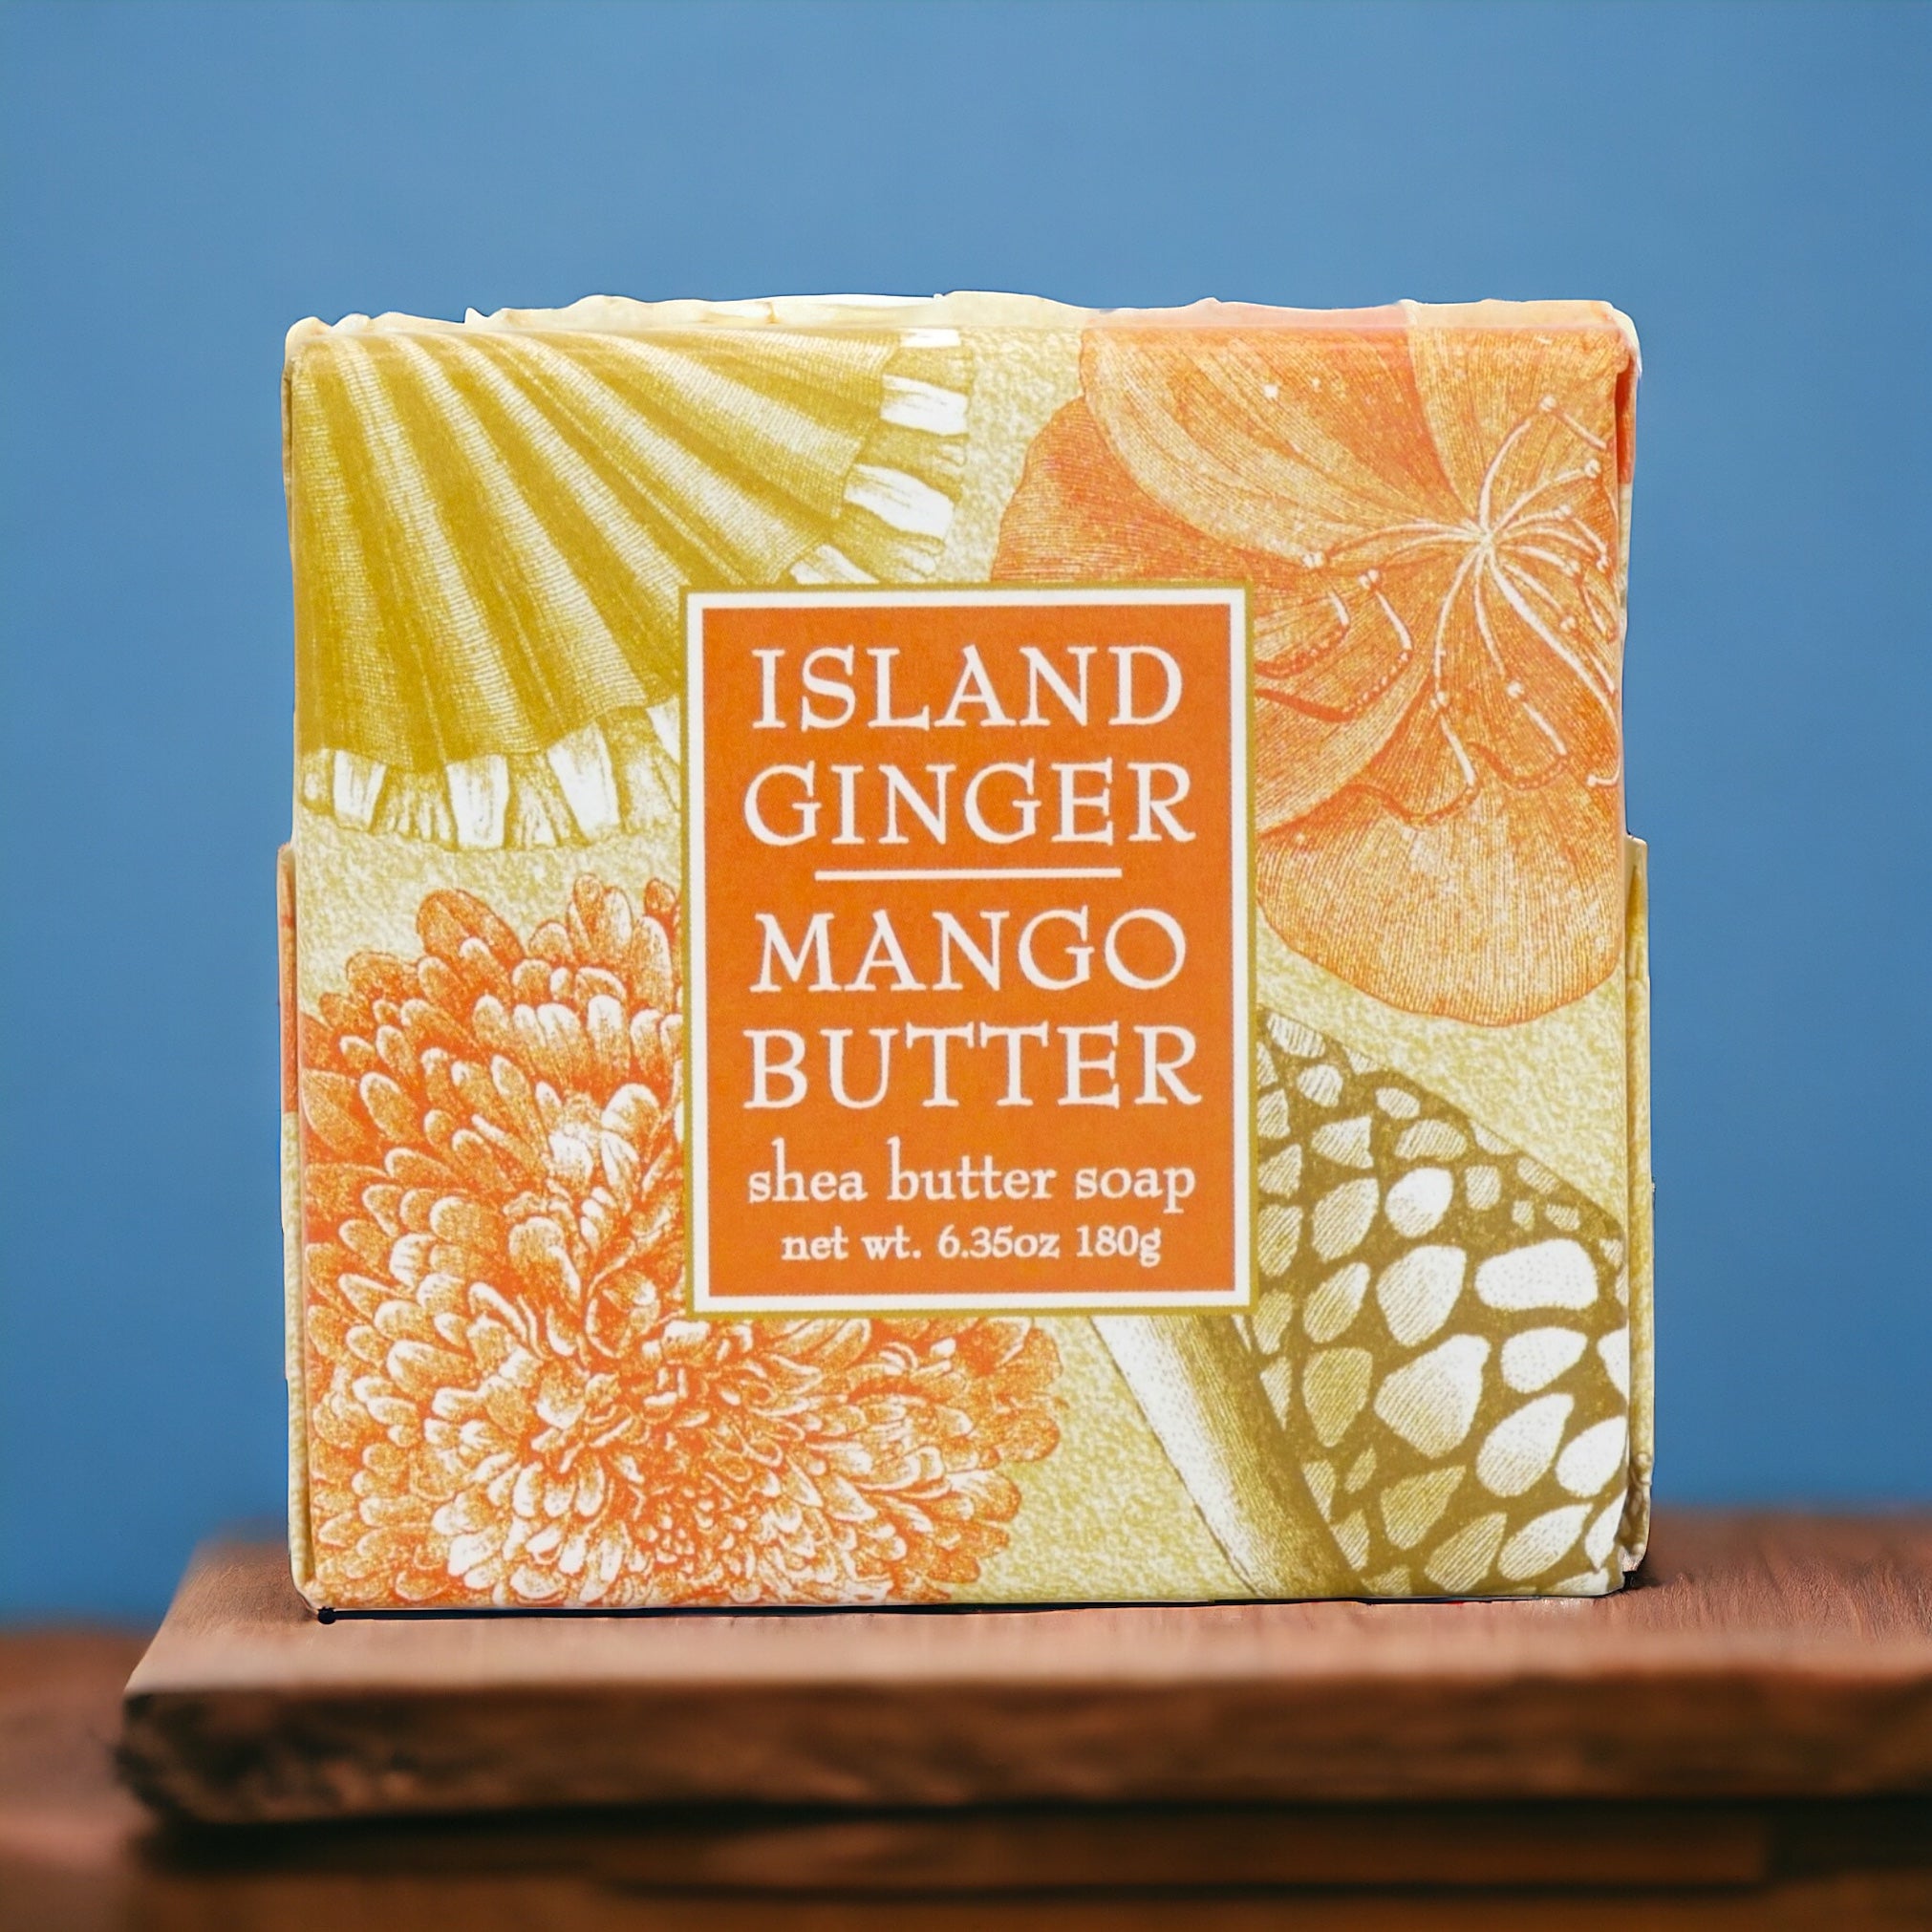 Island Ginger Mango Butter Shea Butter Soap by Greenwich Bay Trading Co.